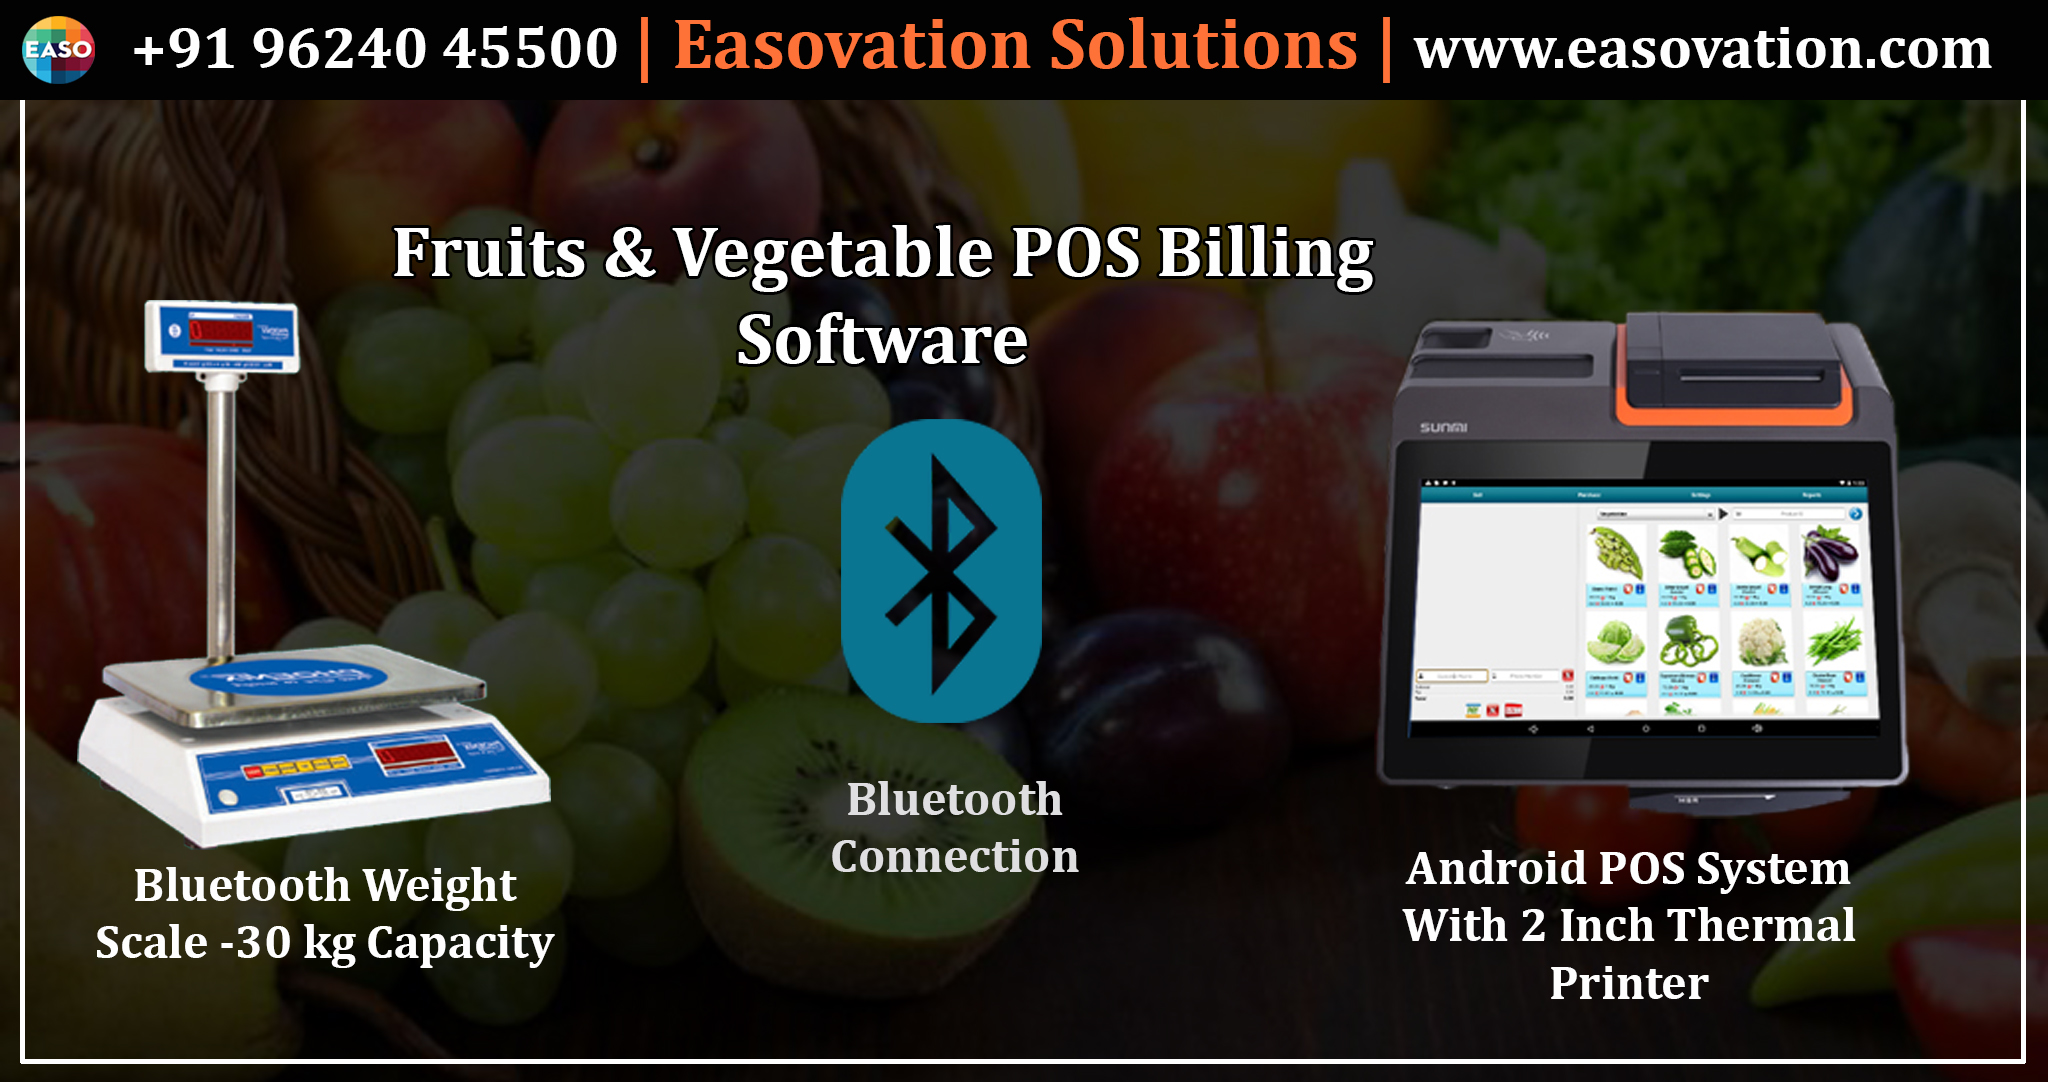 easovation-solutions-navrangpura-ahmedabad-barcode-scanner-dealers-x981b